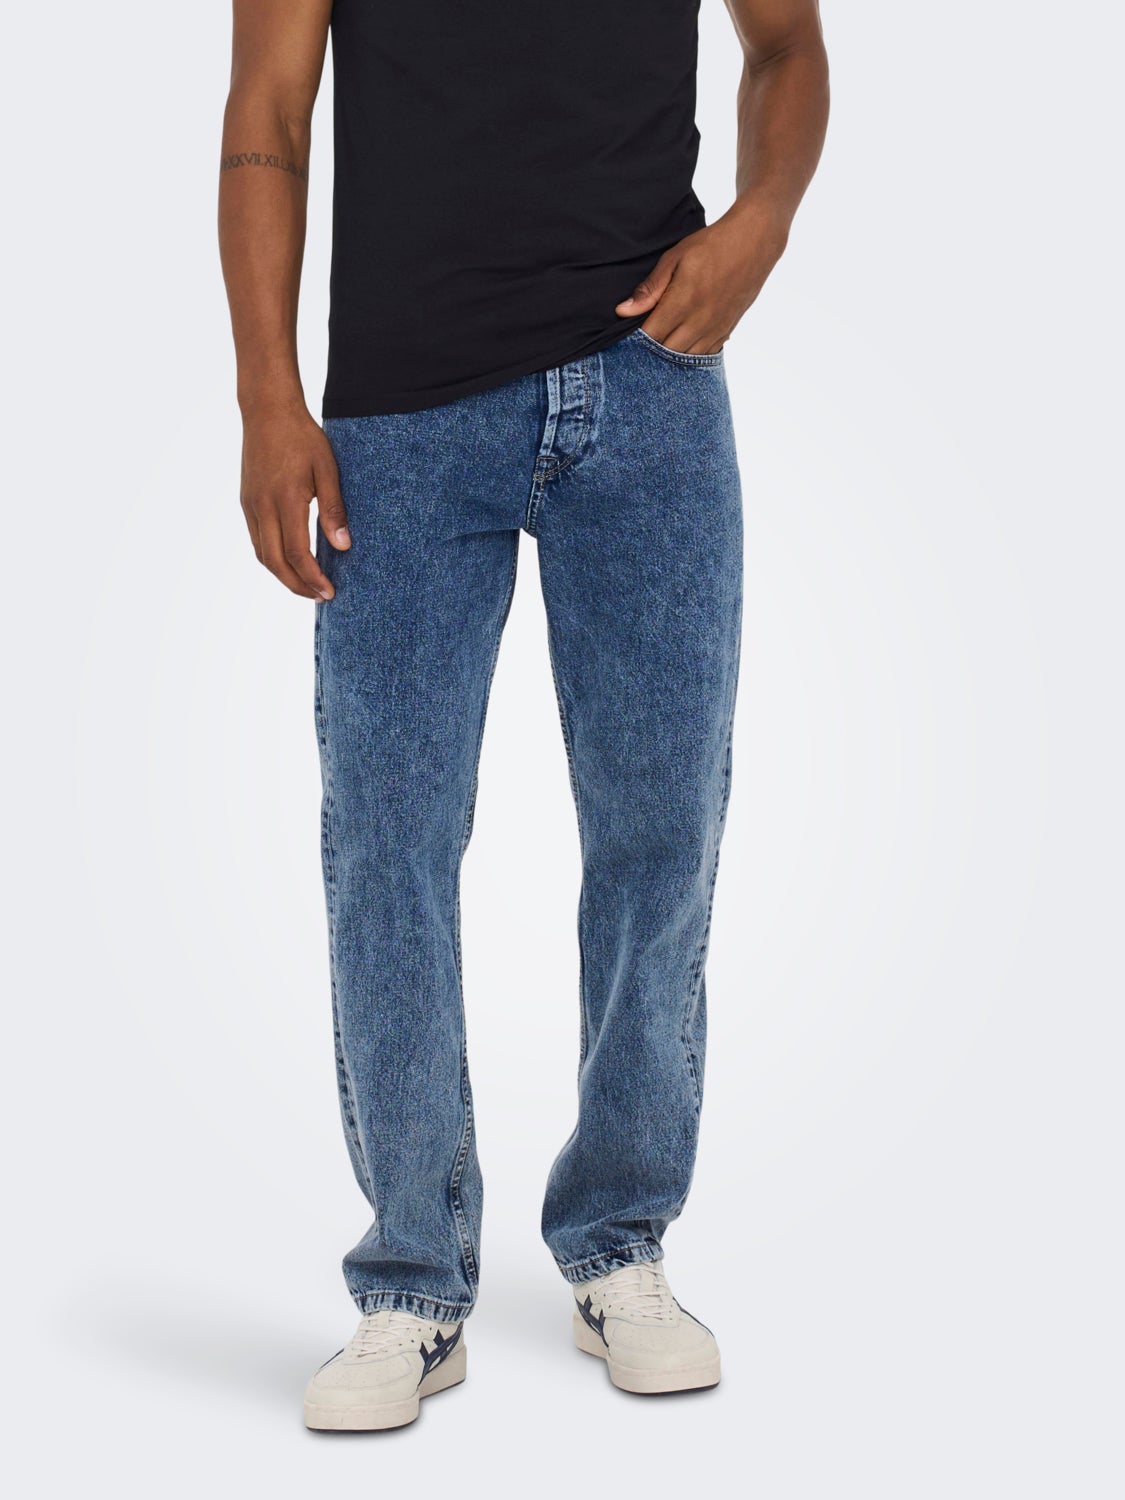 Men's Jeans: Black, Blue & More | ONLY & SONS